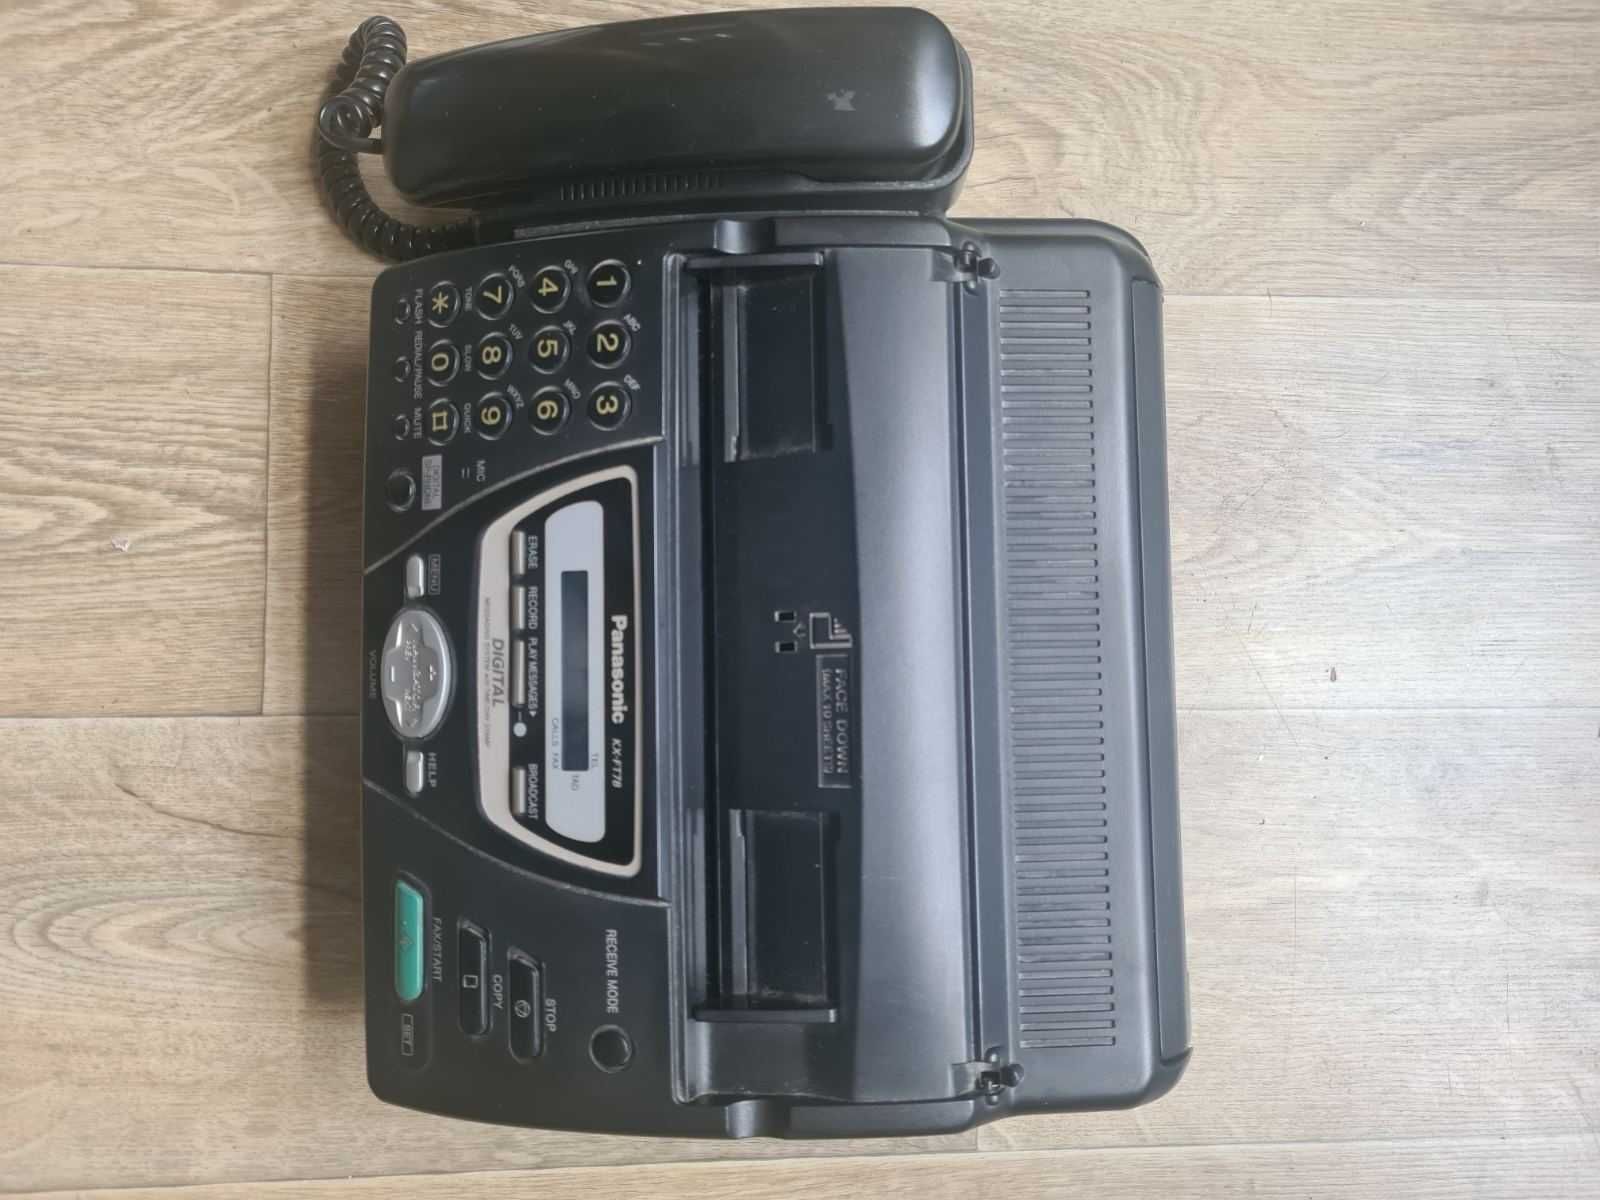 Телефон факс Panasonic KX-FT78